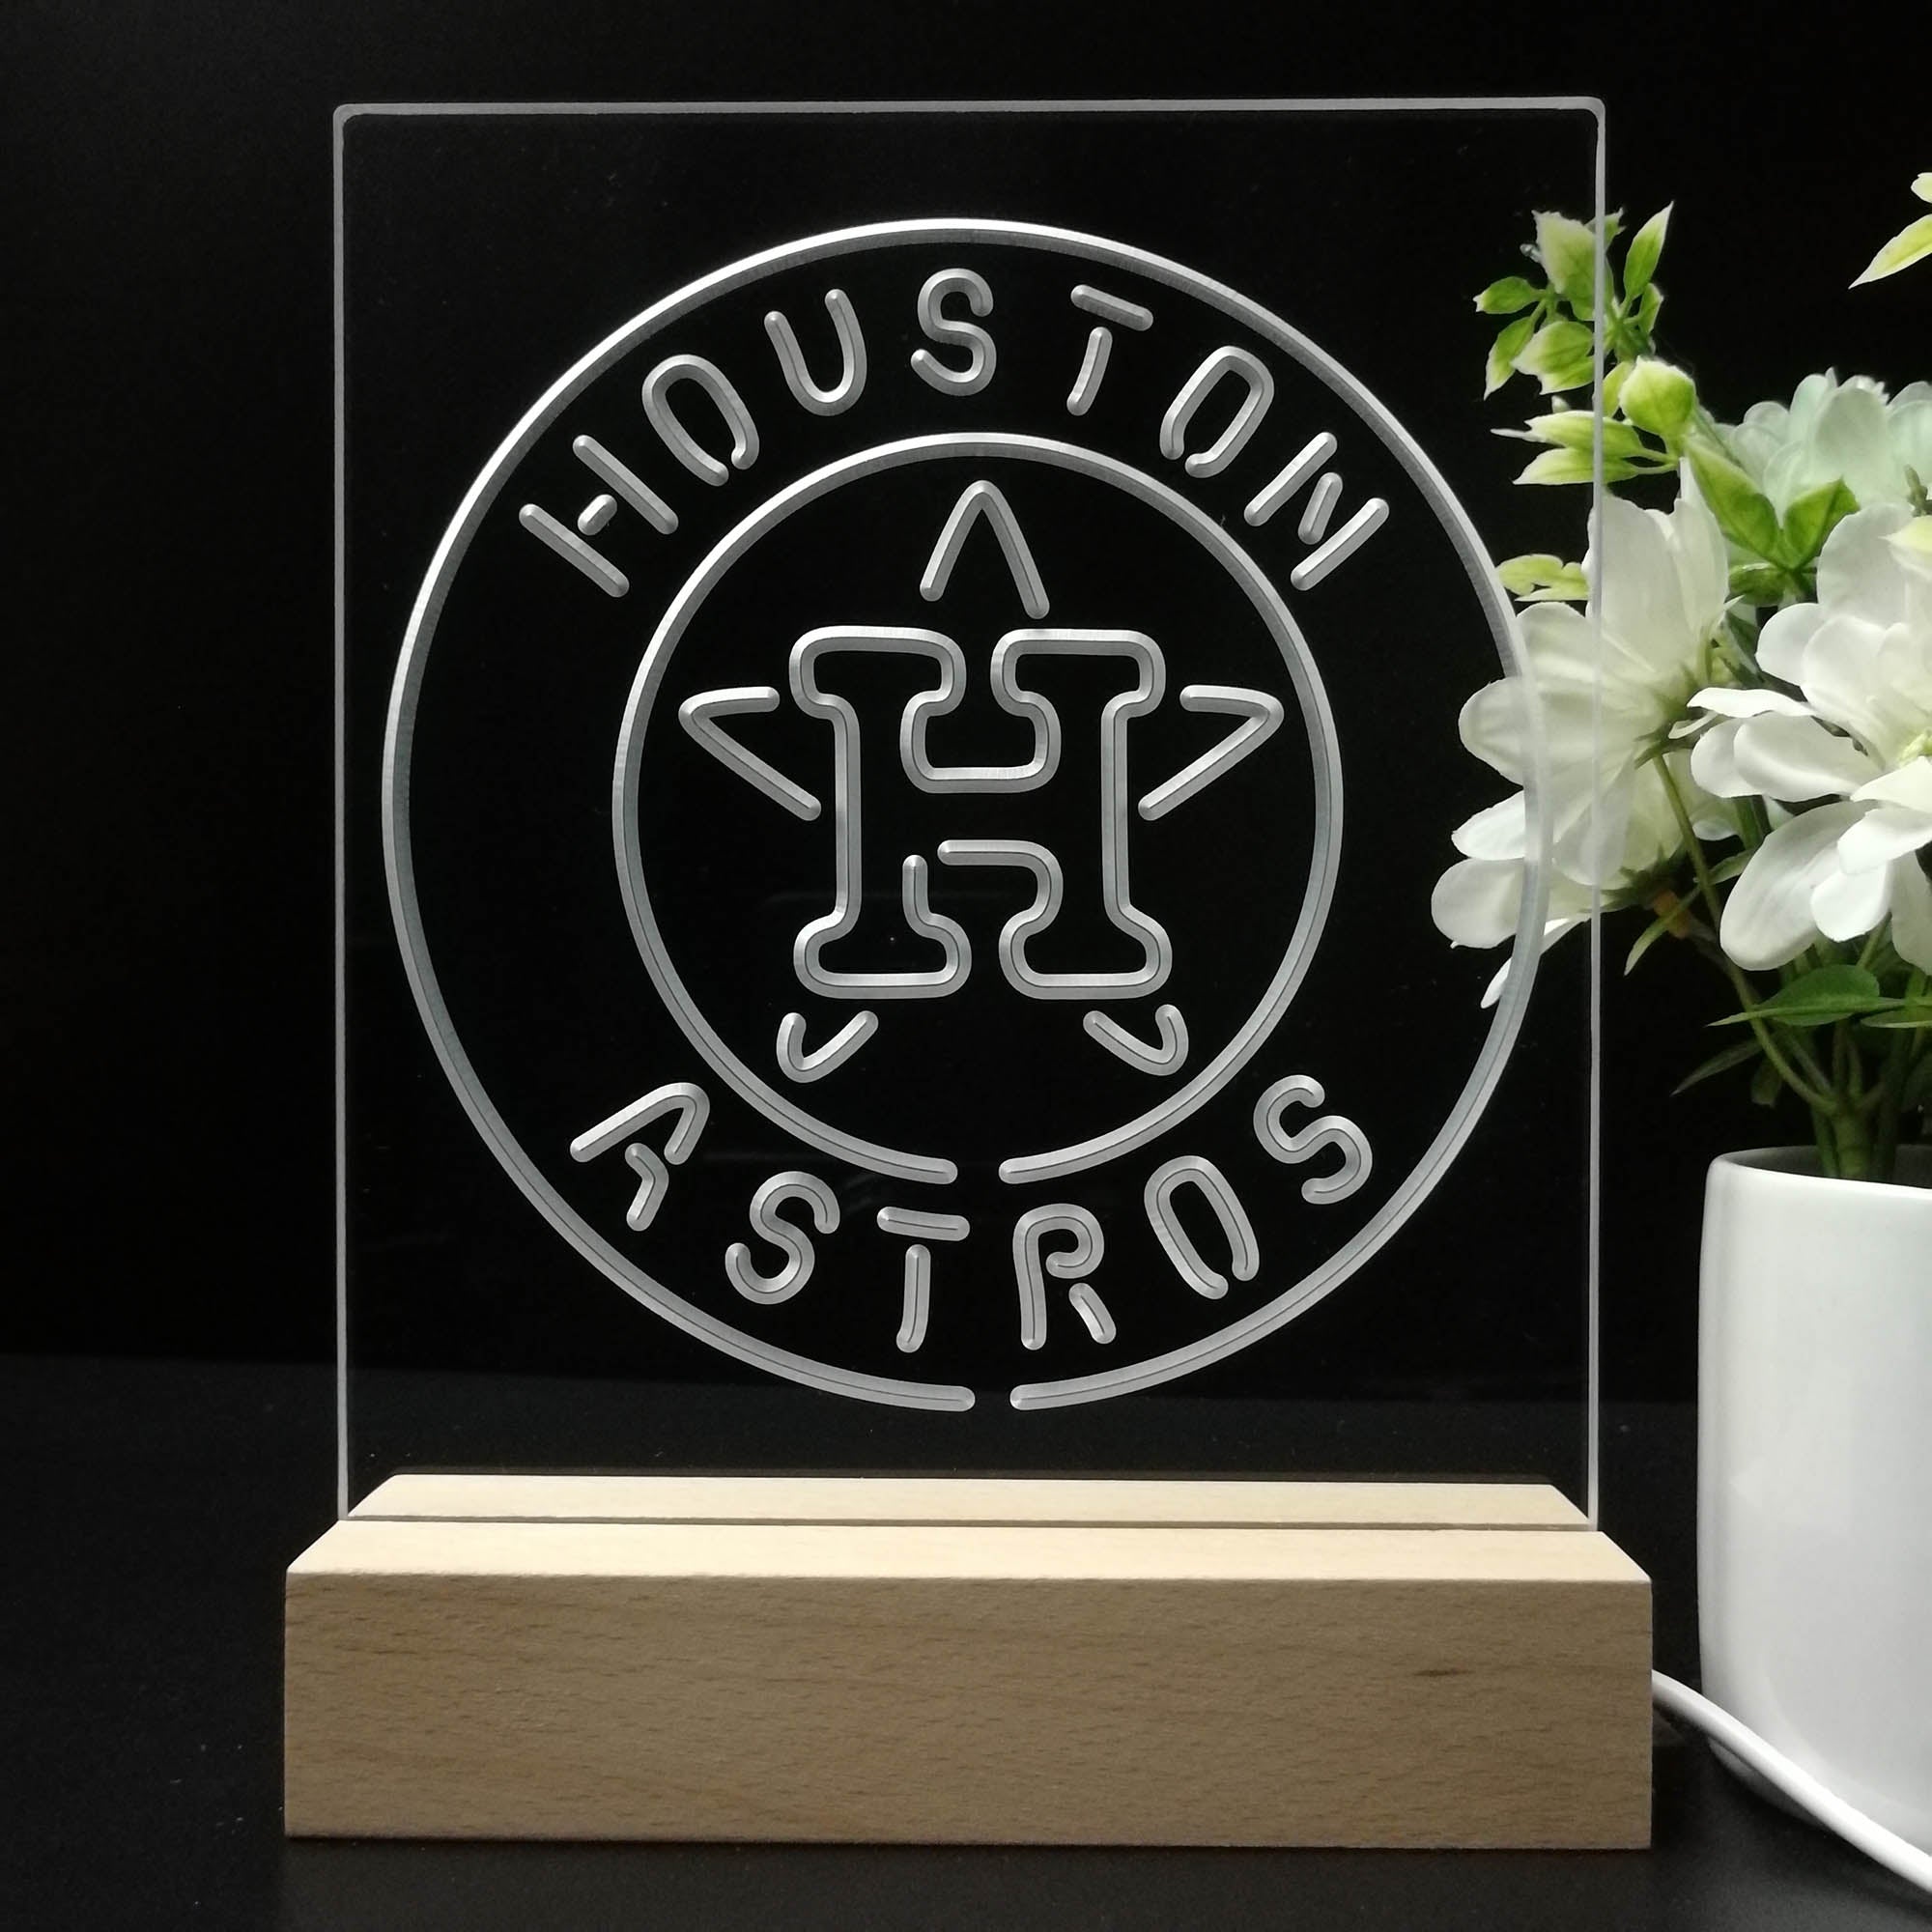 Houston Astros 2022 World Series Champions HD Vivid Neon Sign Light La –